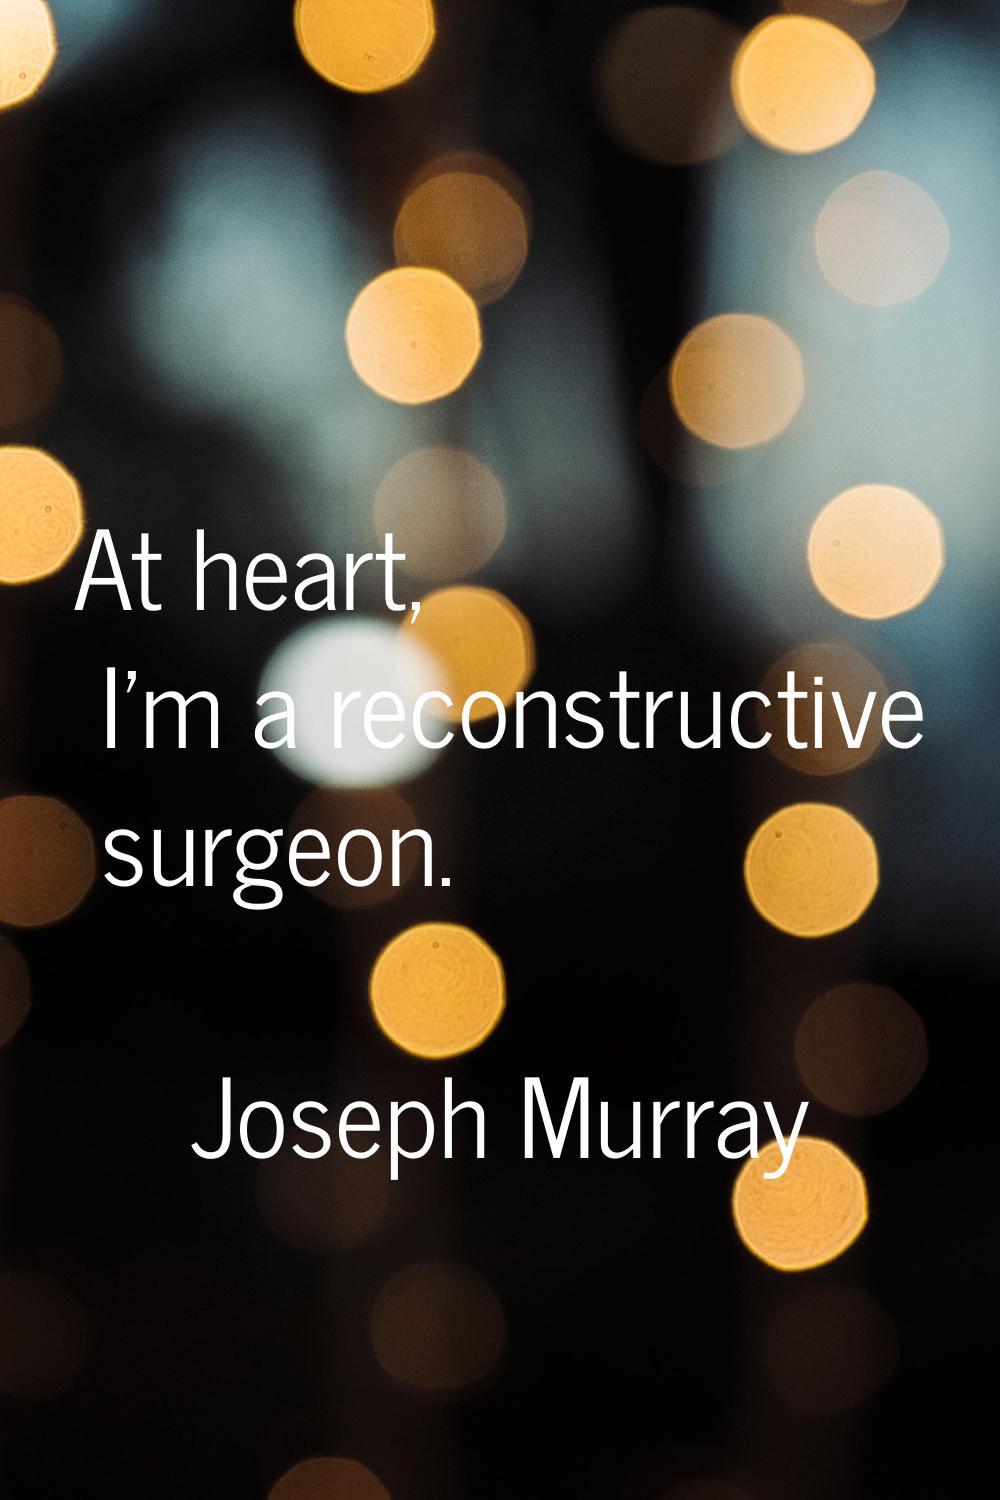 At heart, I'm a reconstructive surgeon.